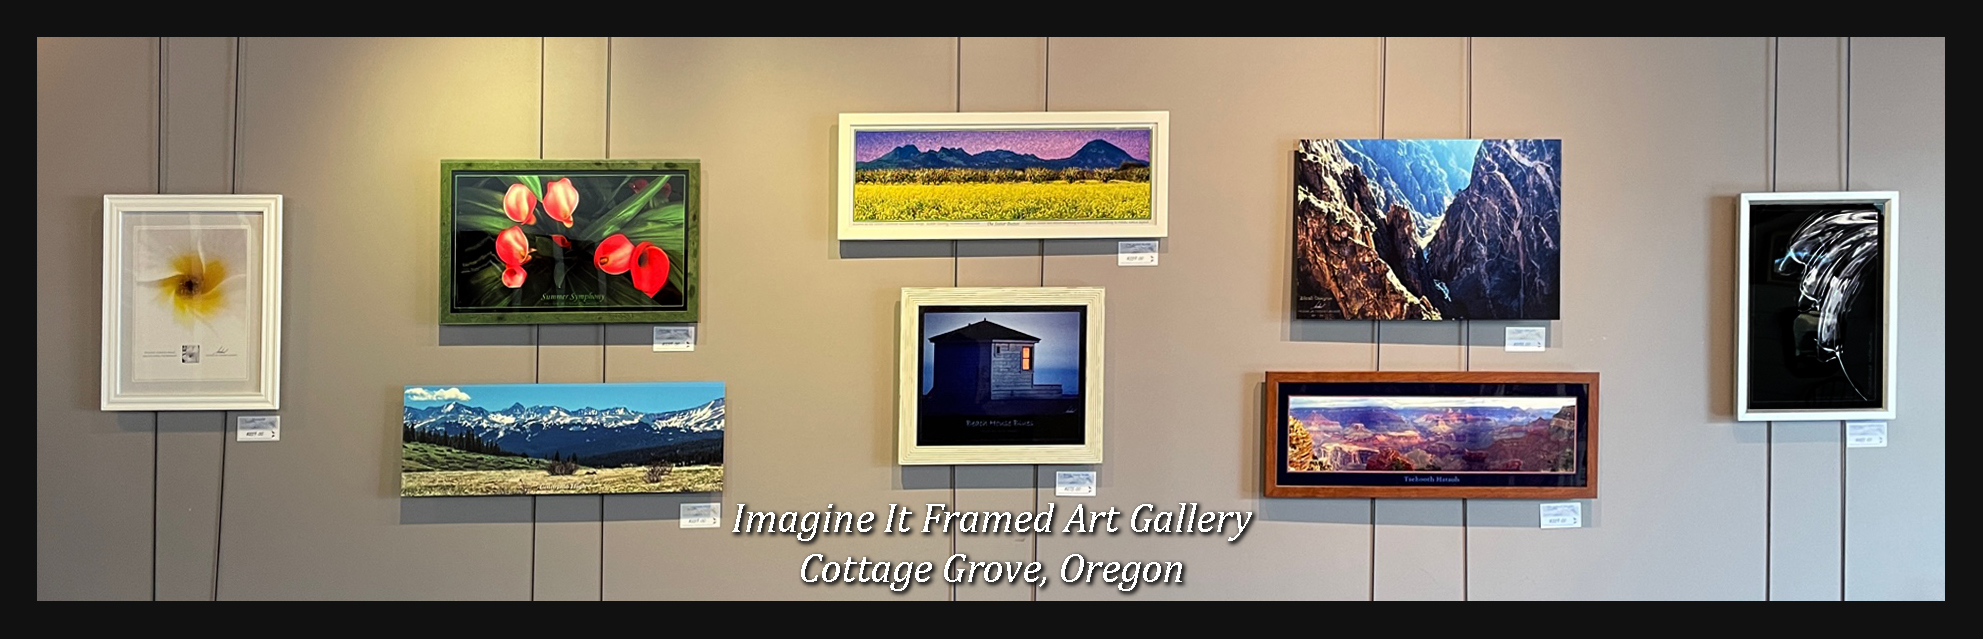 Imagine It Framed Art Gallery
29 South 6th Street
Cottage Grove, Oregon 97424
541-942-5036